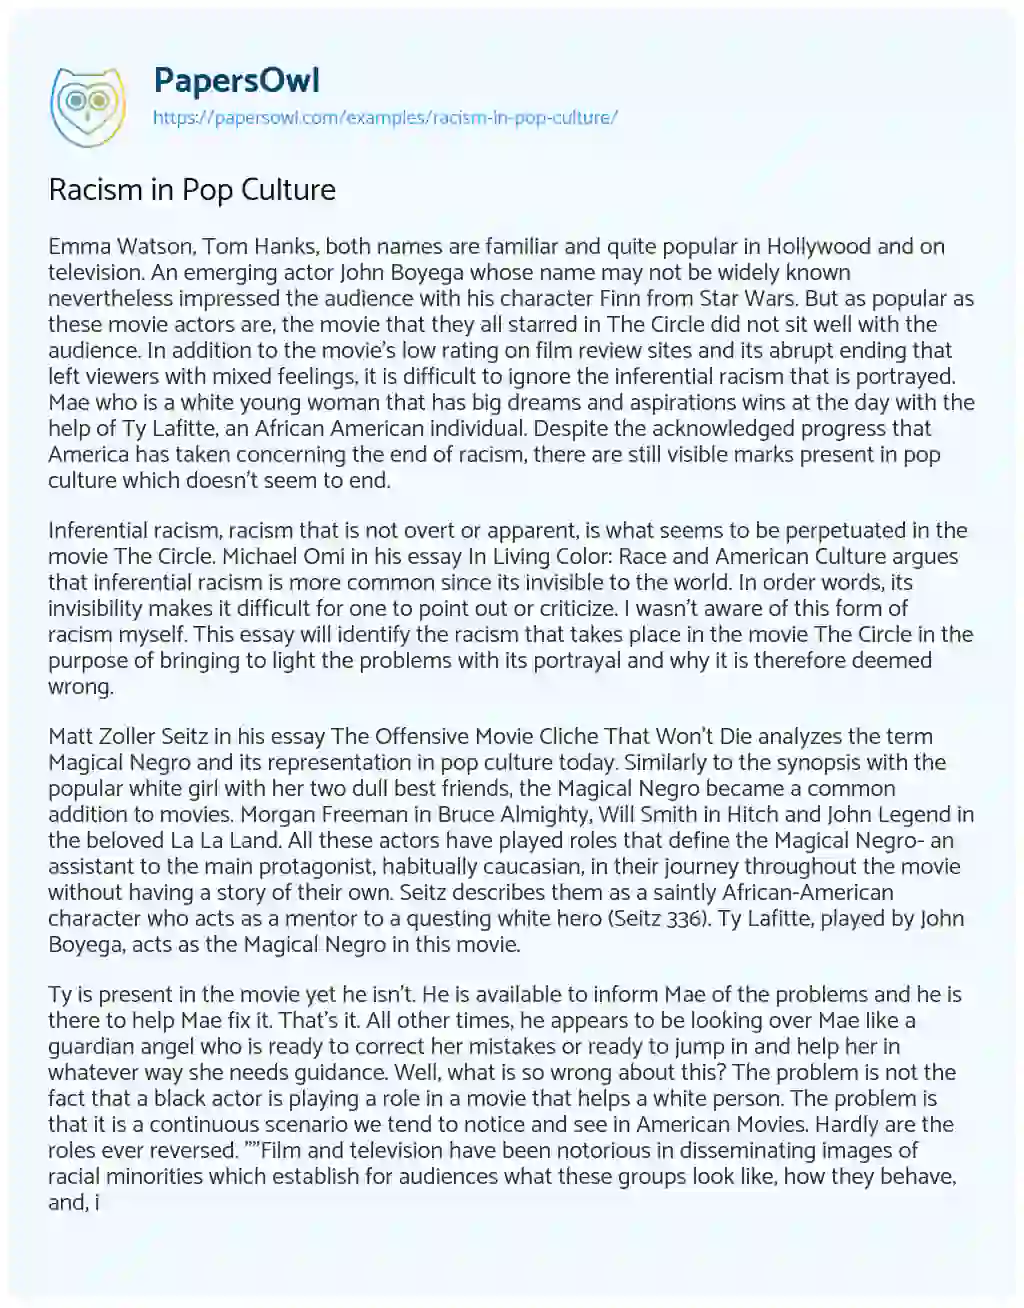 Racism in Pop Culture essay